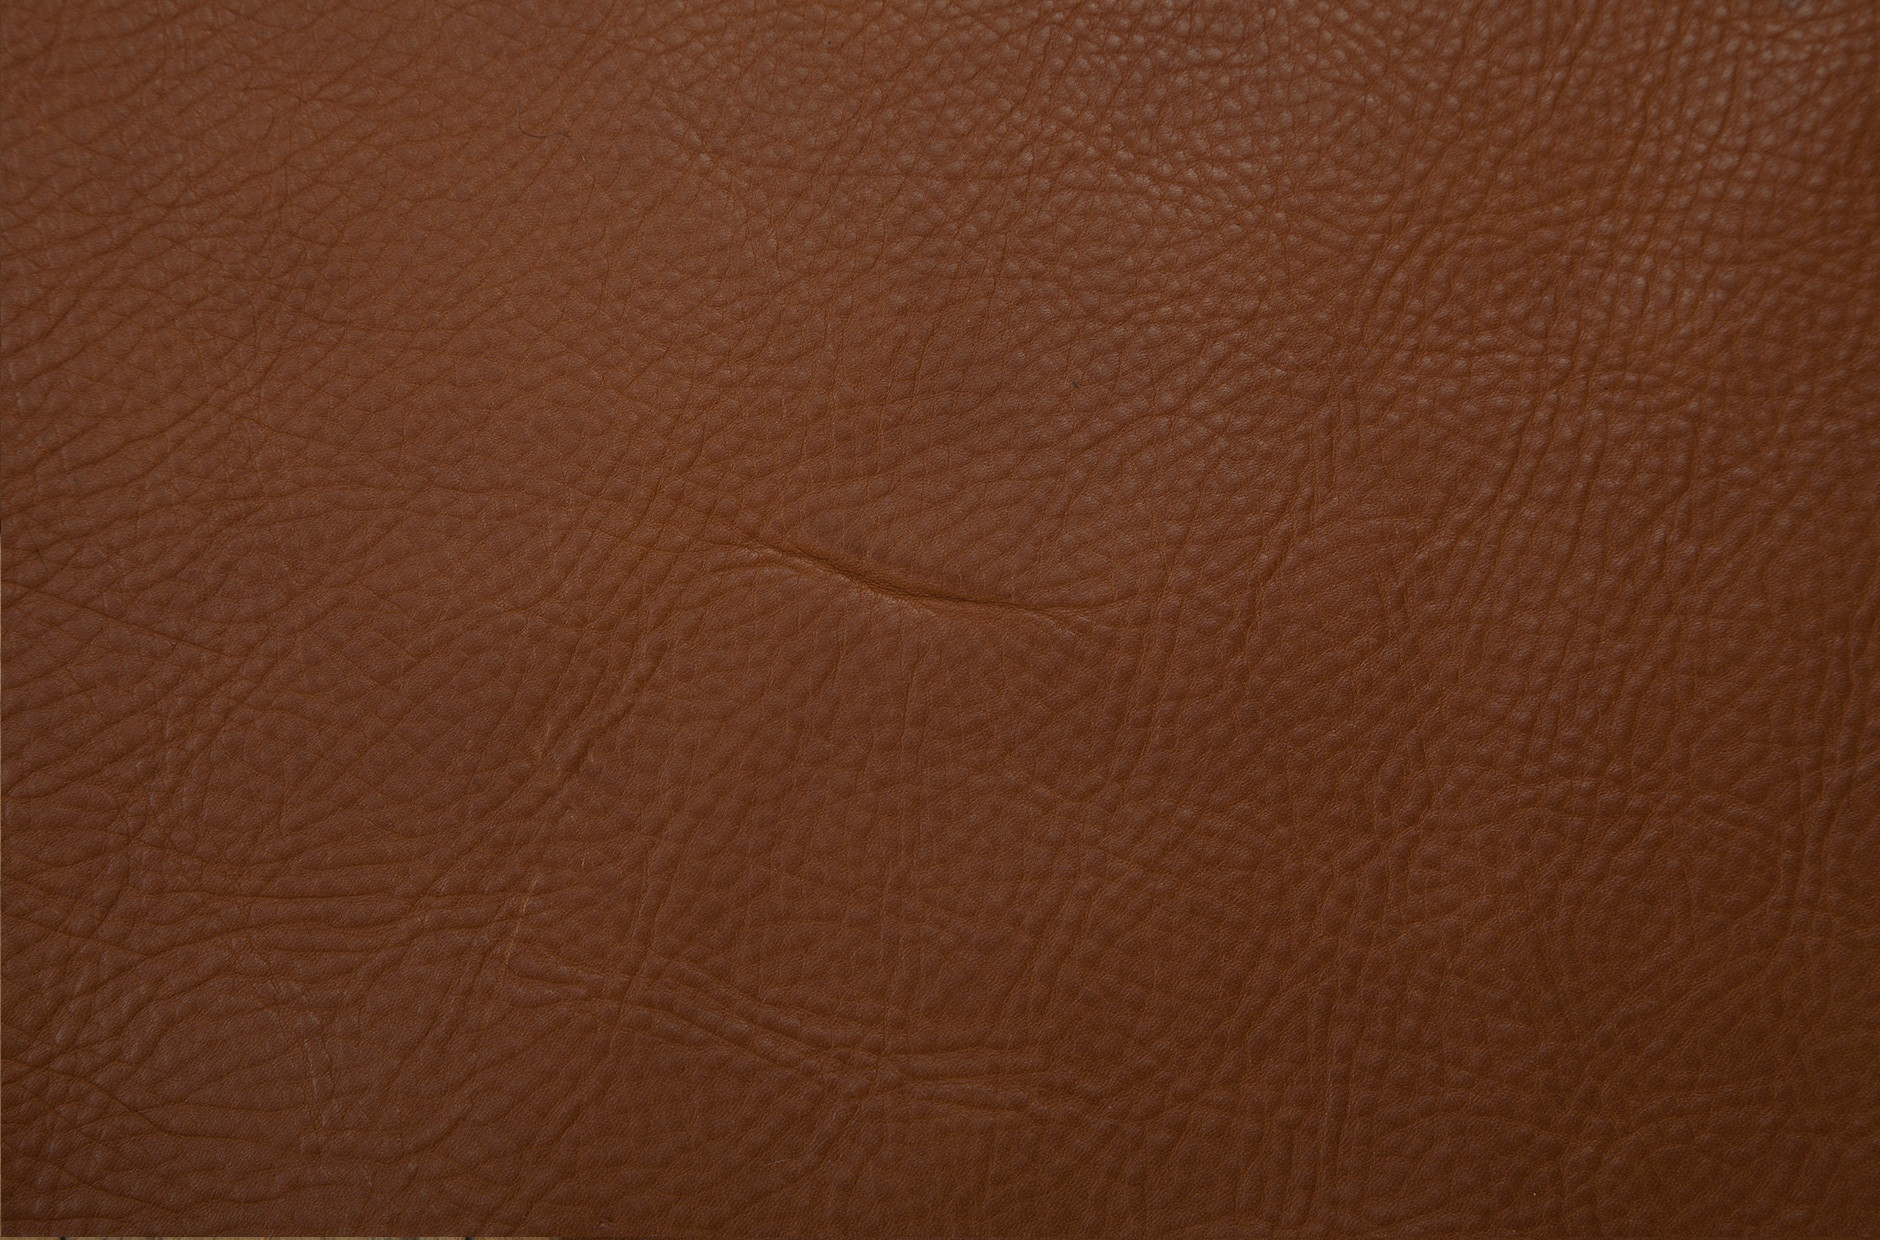 leather-unheals-scars.jpg